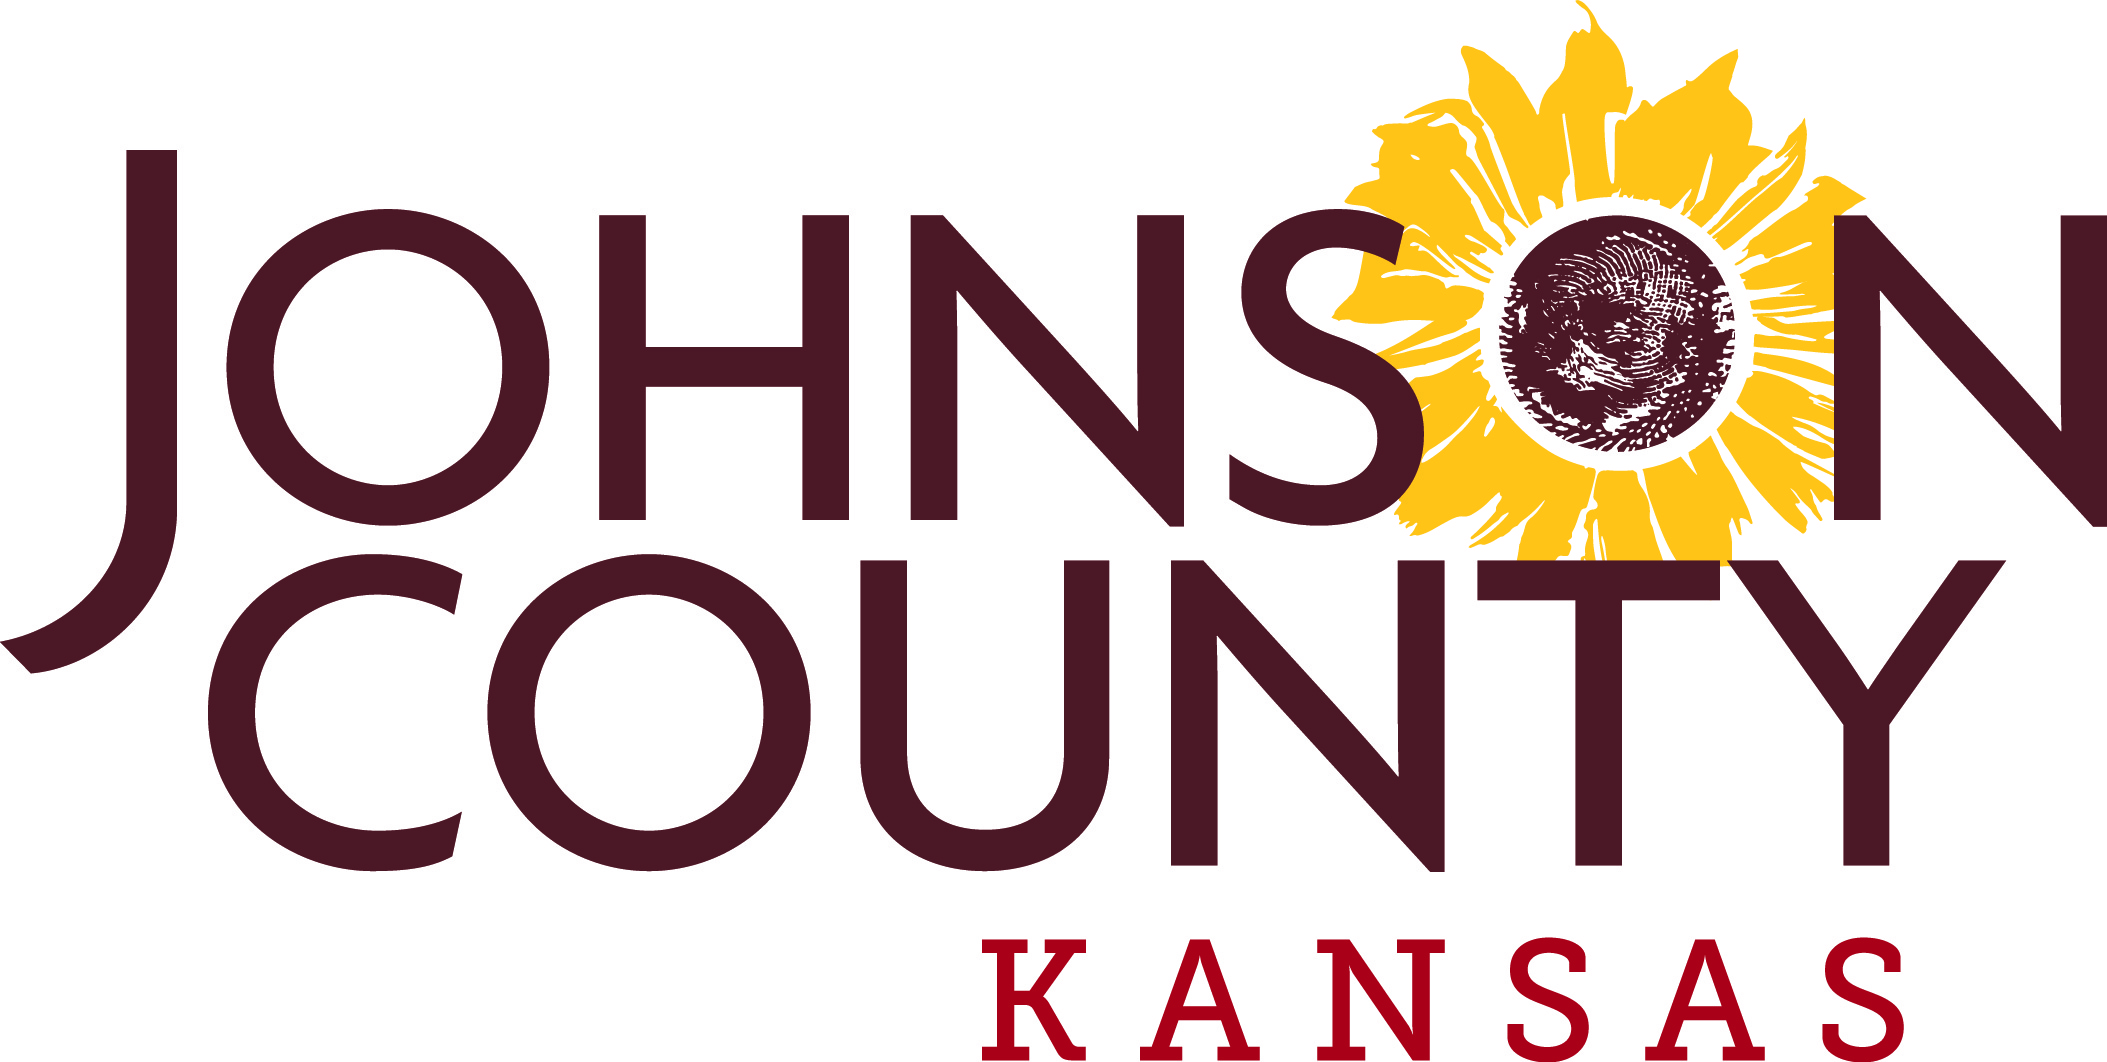 Johnson County Kansas